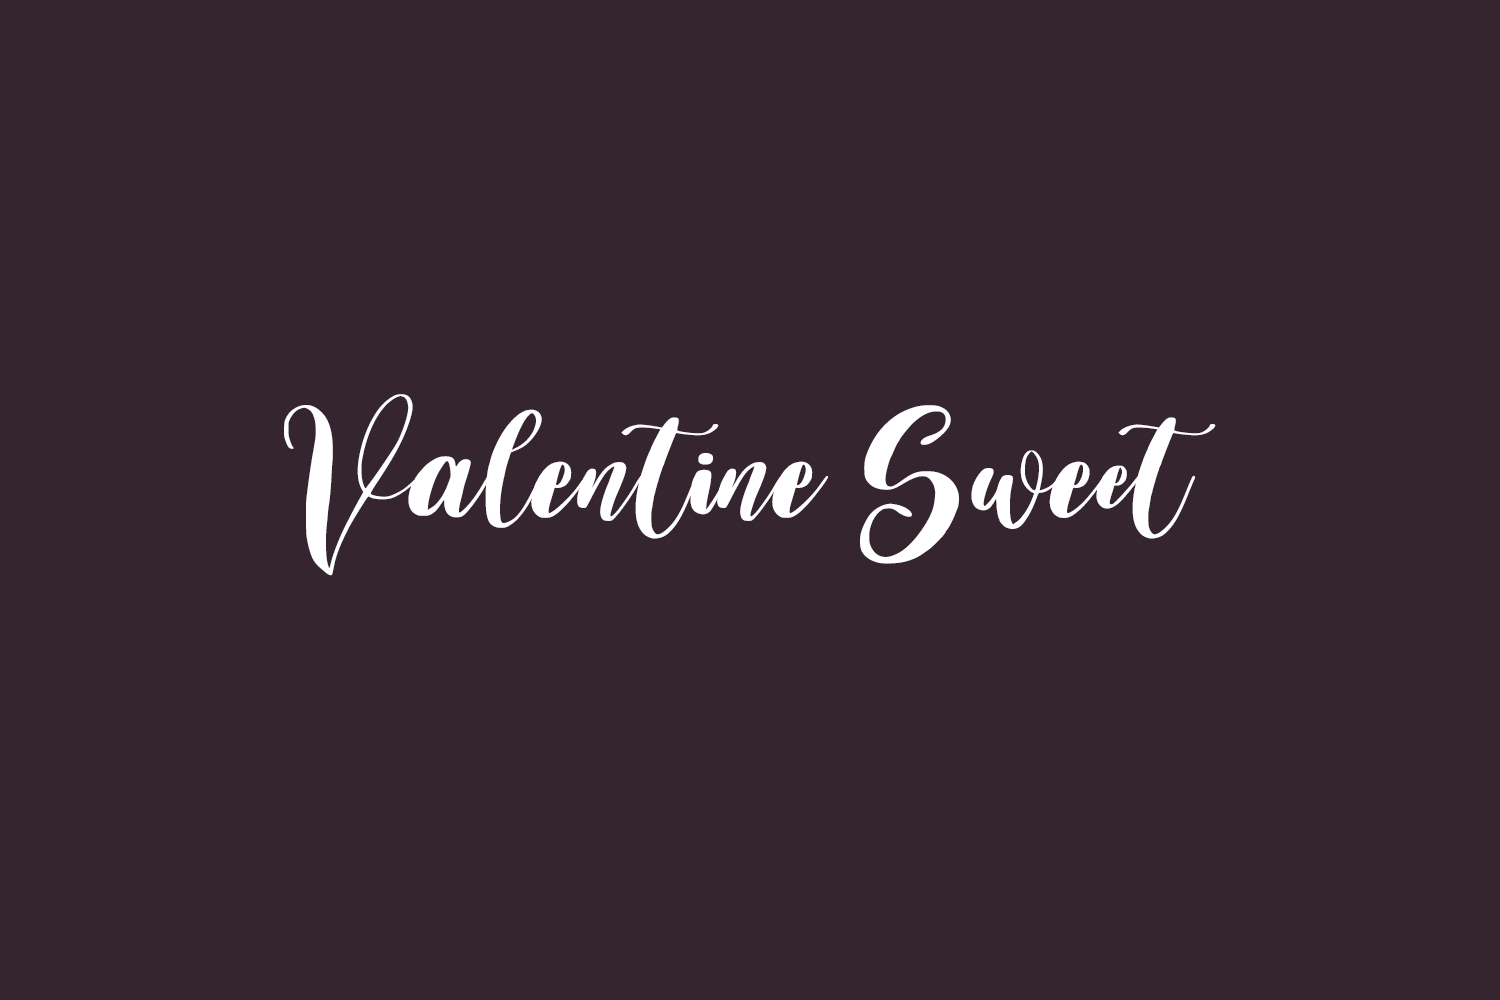 Valentine Sweet Free Font